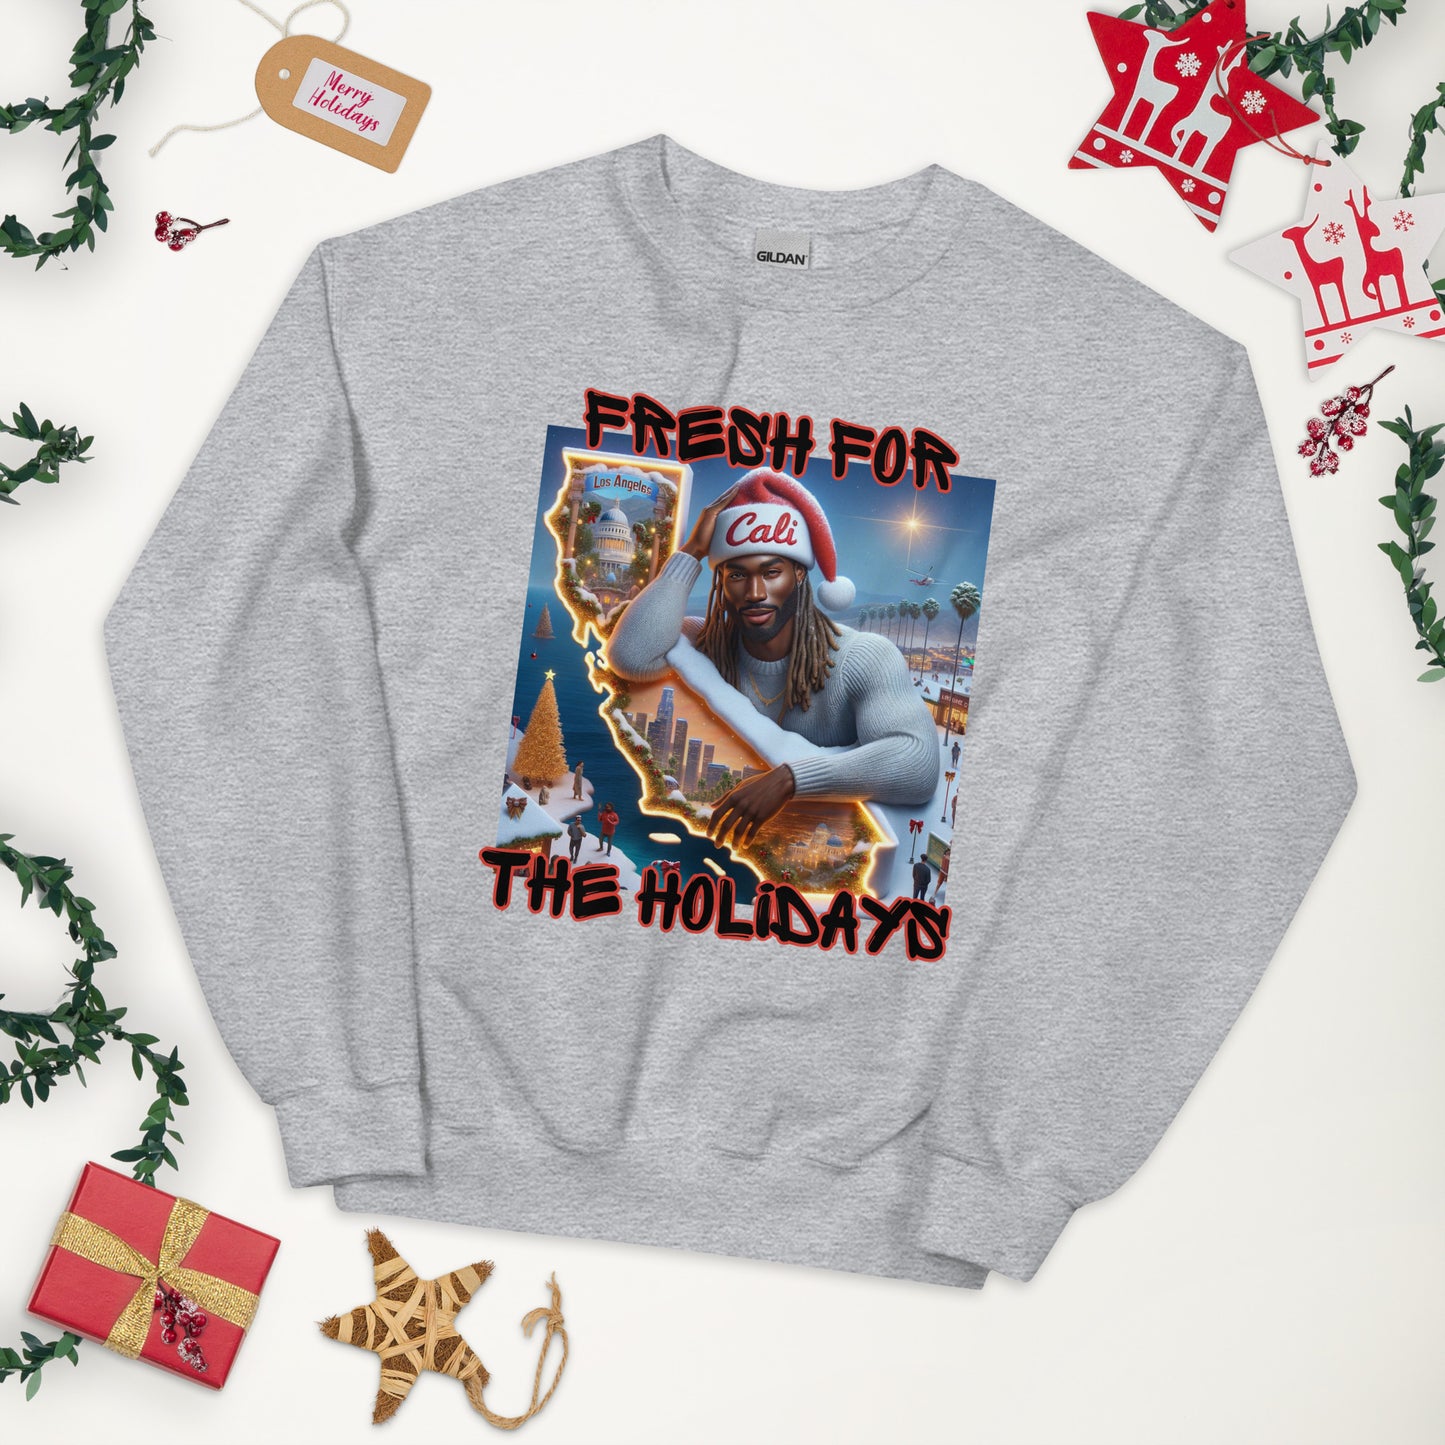 "Fresh For The Holidays" Sweatshirt (California)